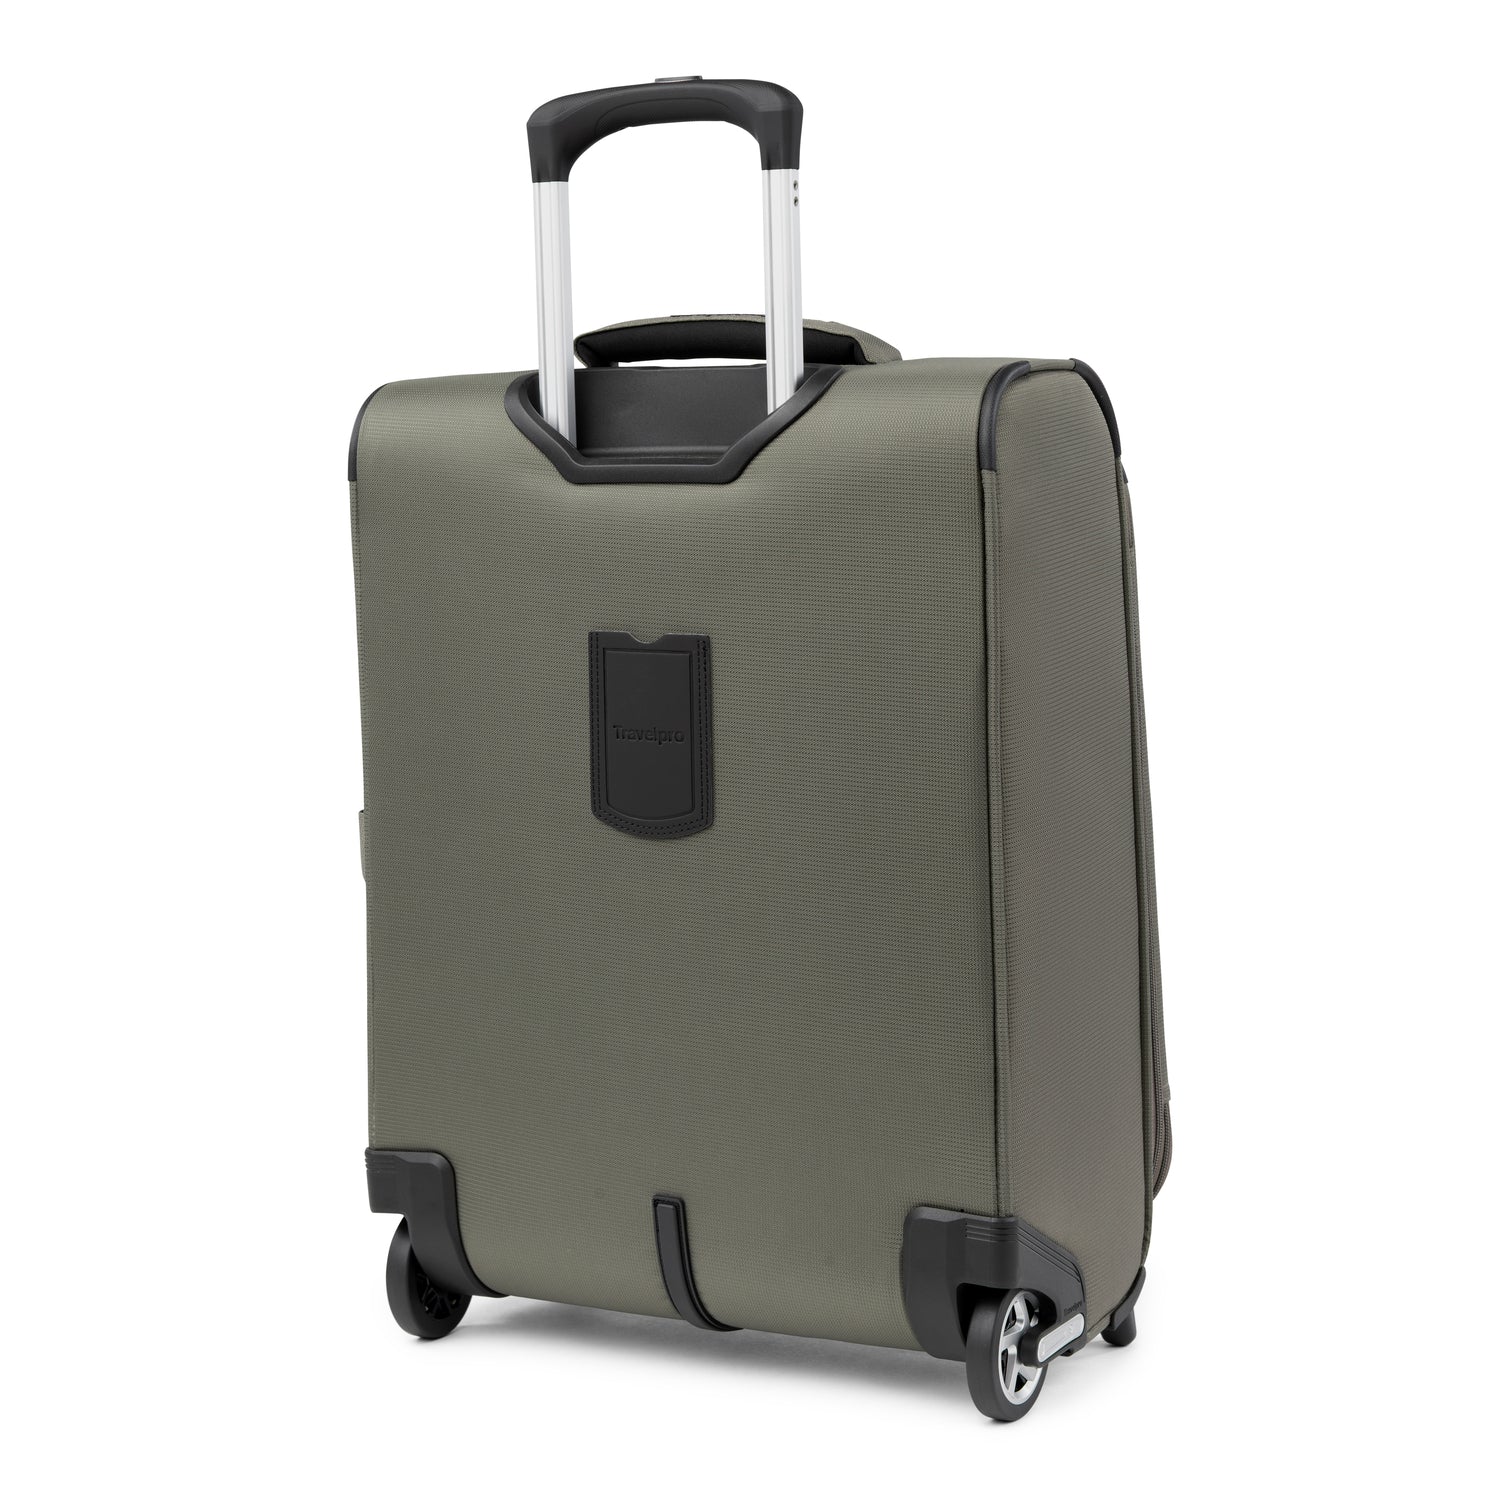 JRGT Premium Quality Supreme Hardsided Luggage Trolley, Set of 5